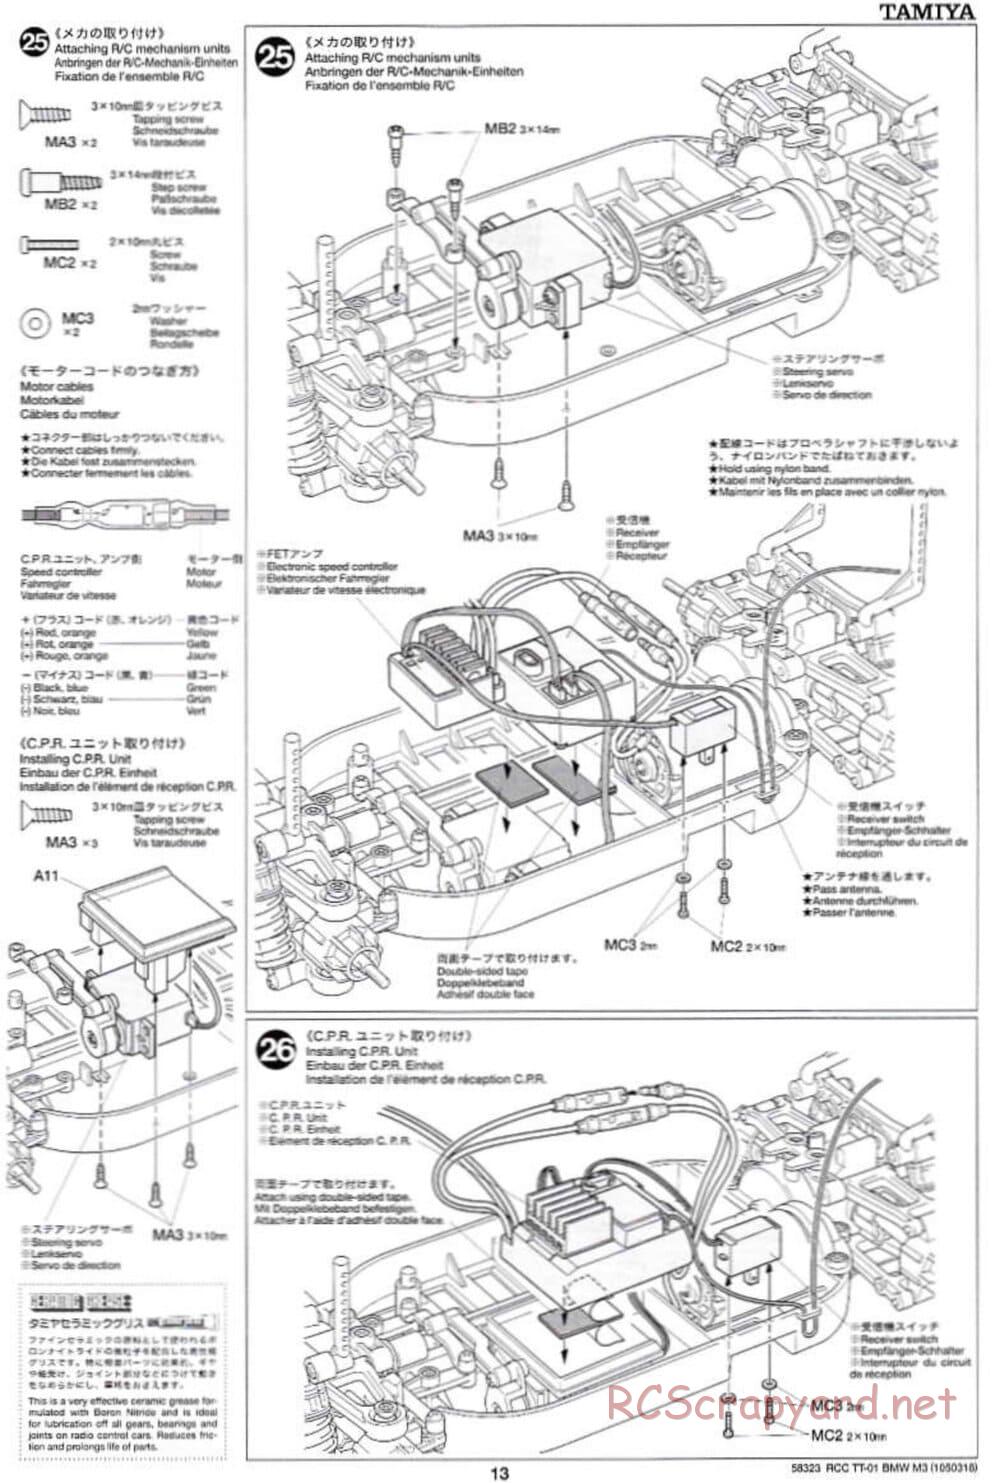 Tamiya - Schnitzer BMW M3 Sport Evo - TT-01 Chassis - Manual - Page 13